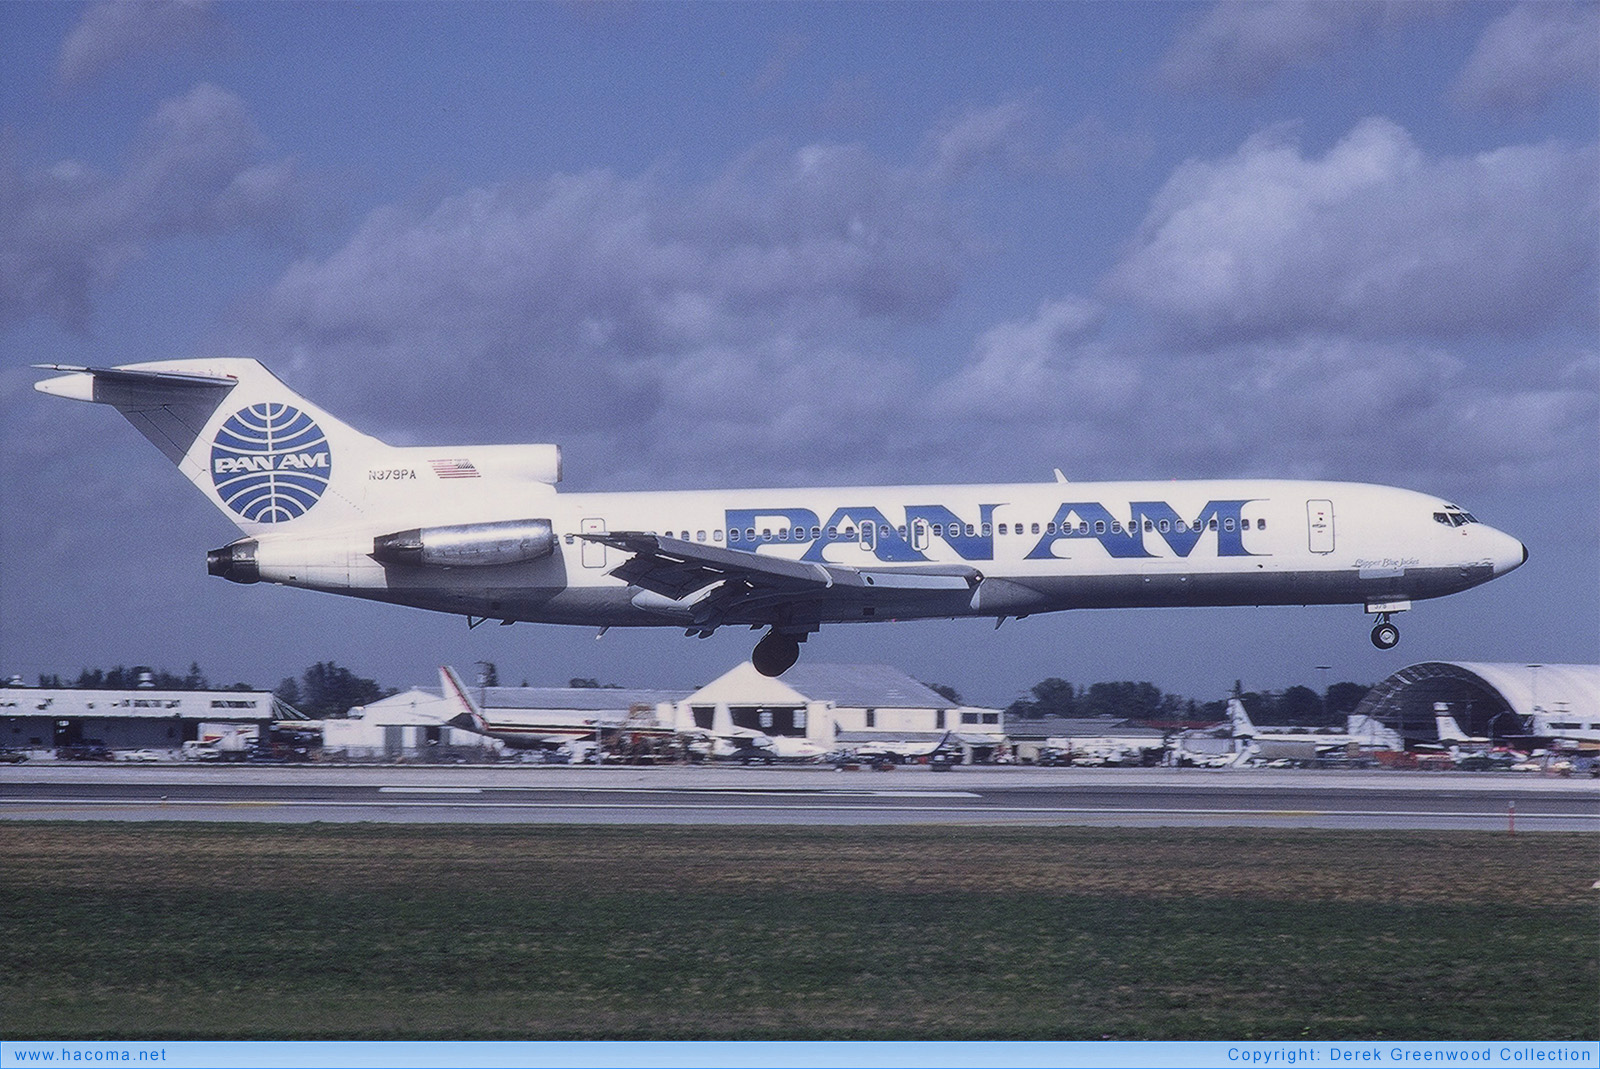 Foto von N379PA - Pan Am Clipper Blue Jacket - Miami International Airport - 1989